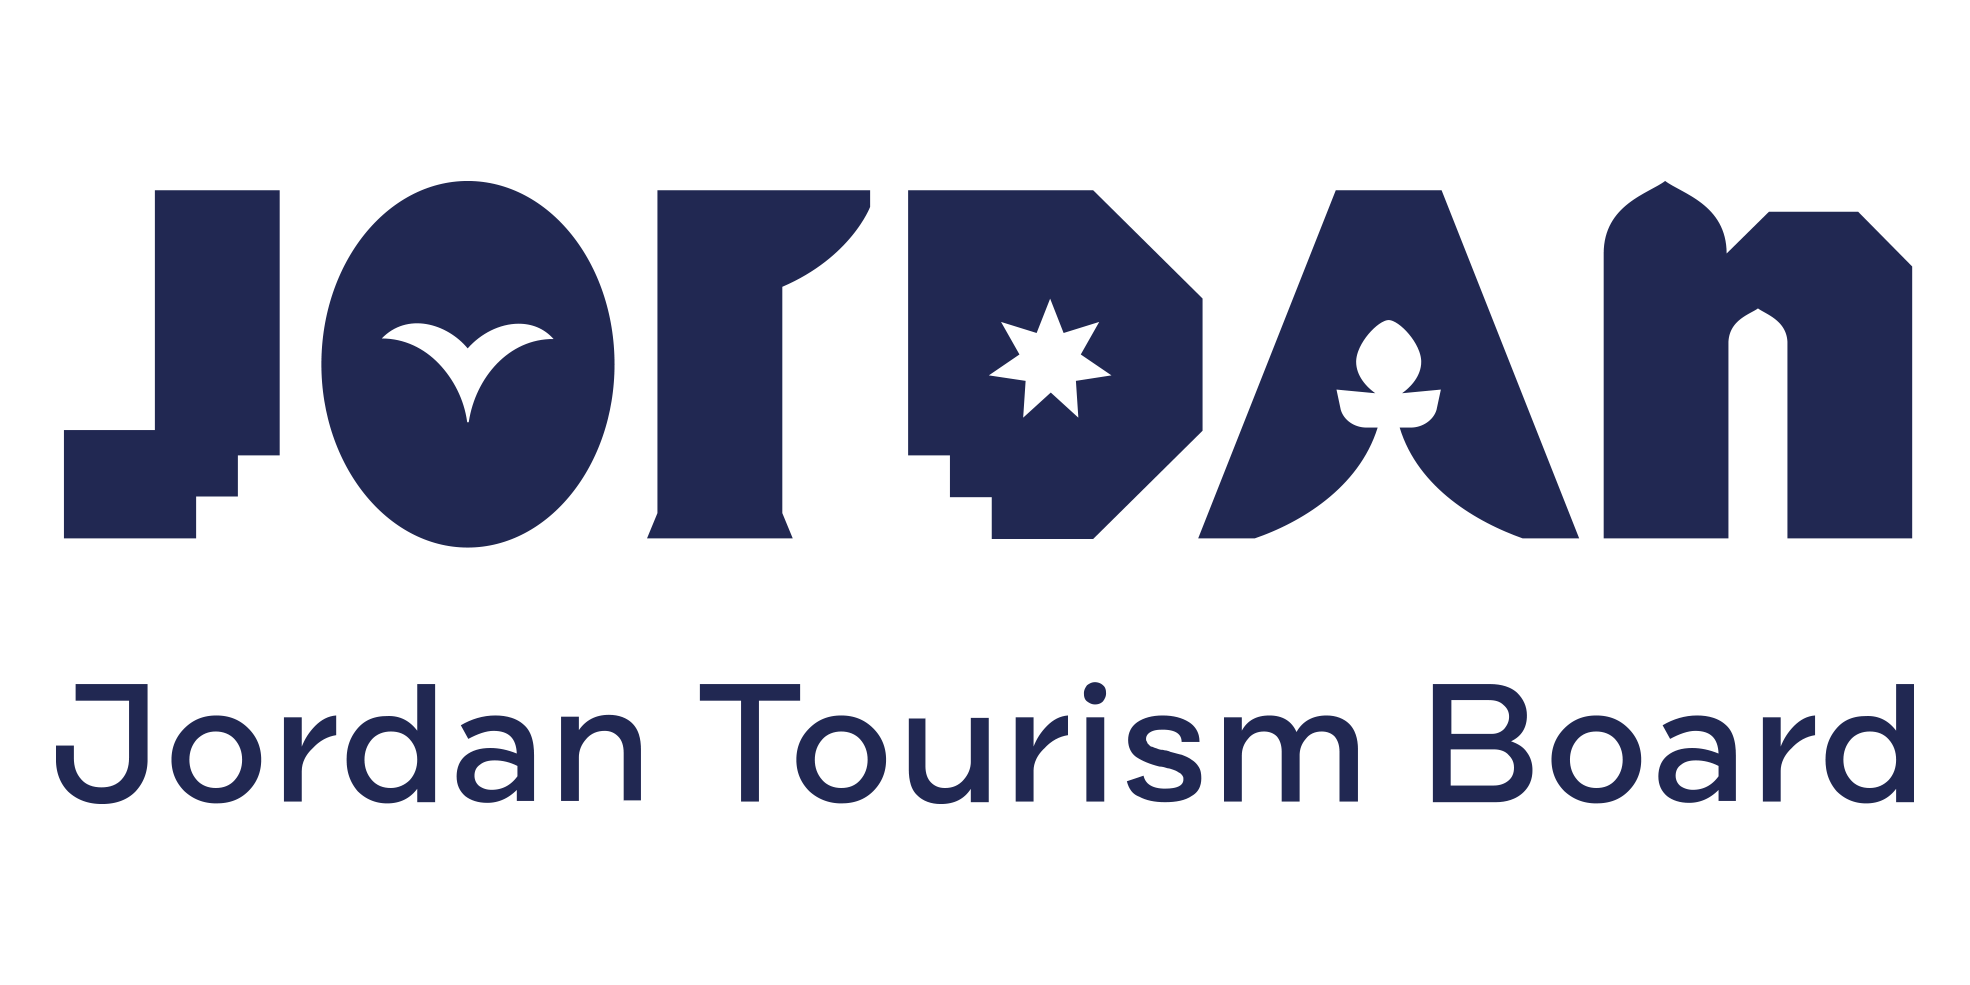 Jordan Tourism Board: Logistical partner